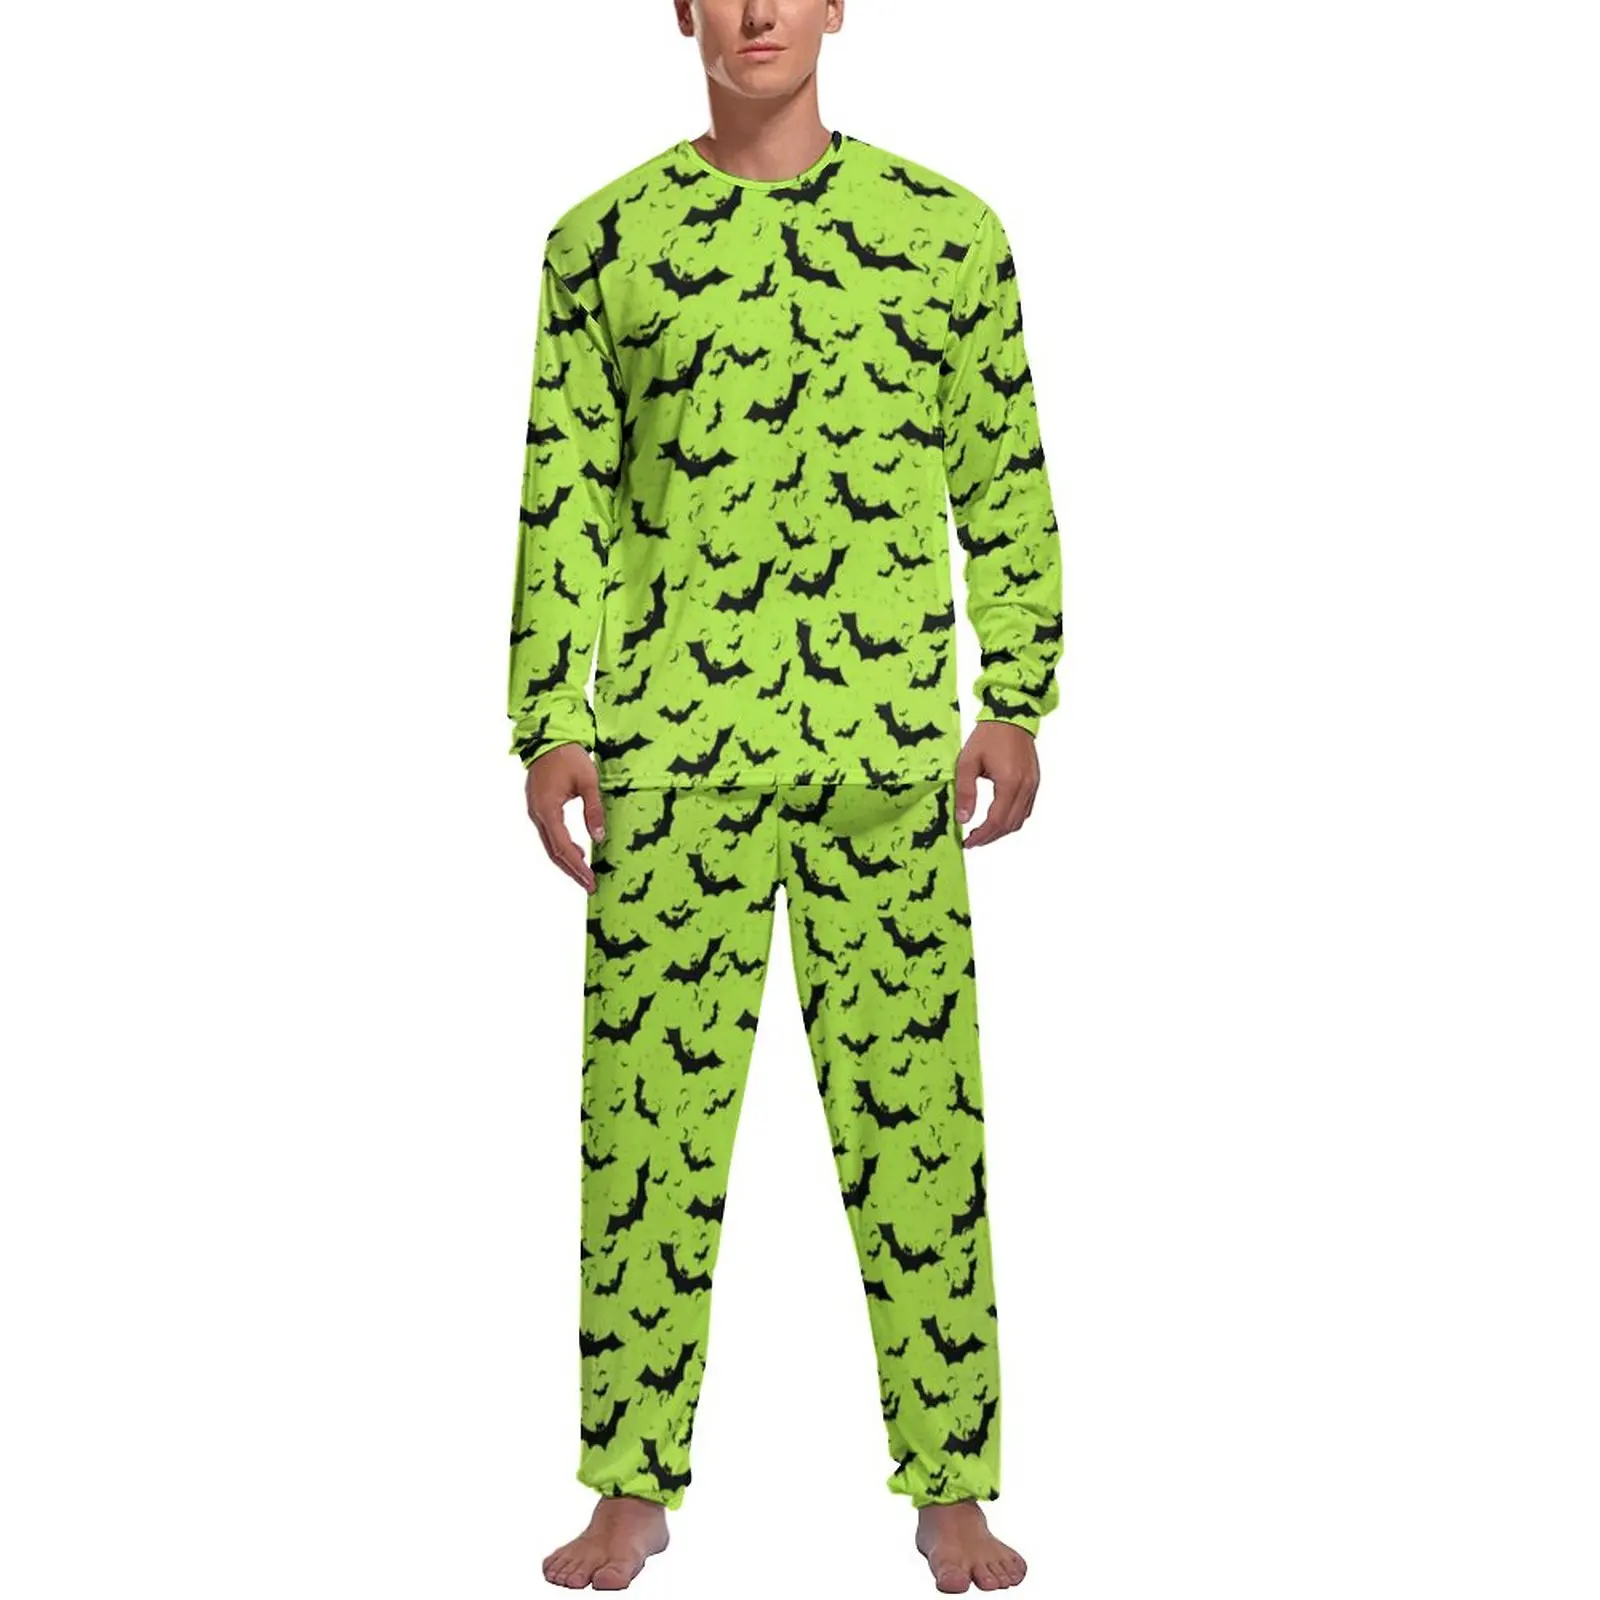 Black Bats Print Pajamas Men Halloween Gothic Cute Nightwear Spring Long Sleeves 2 Pieces Sleep Design Pajamas Set